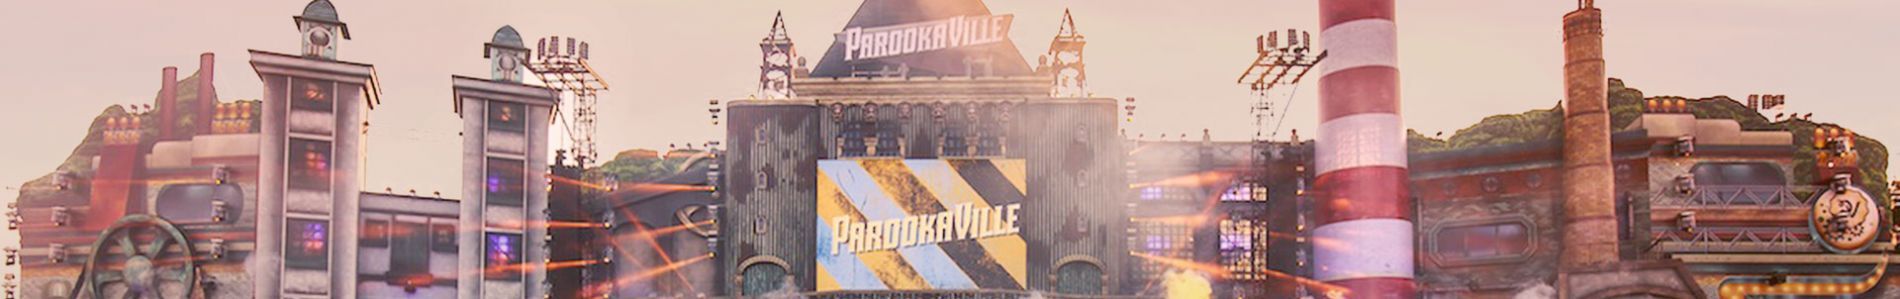 Win a trip & tickets to Parookaville!